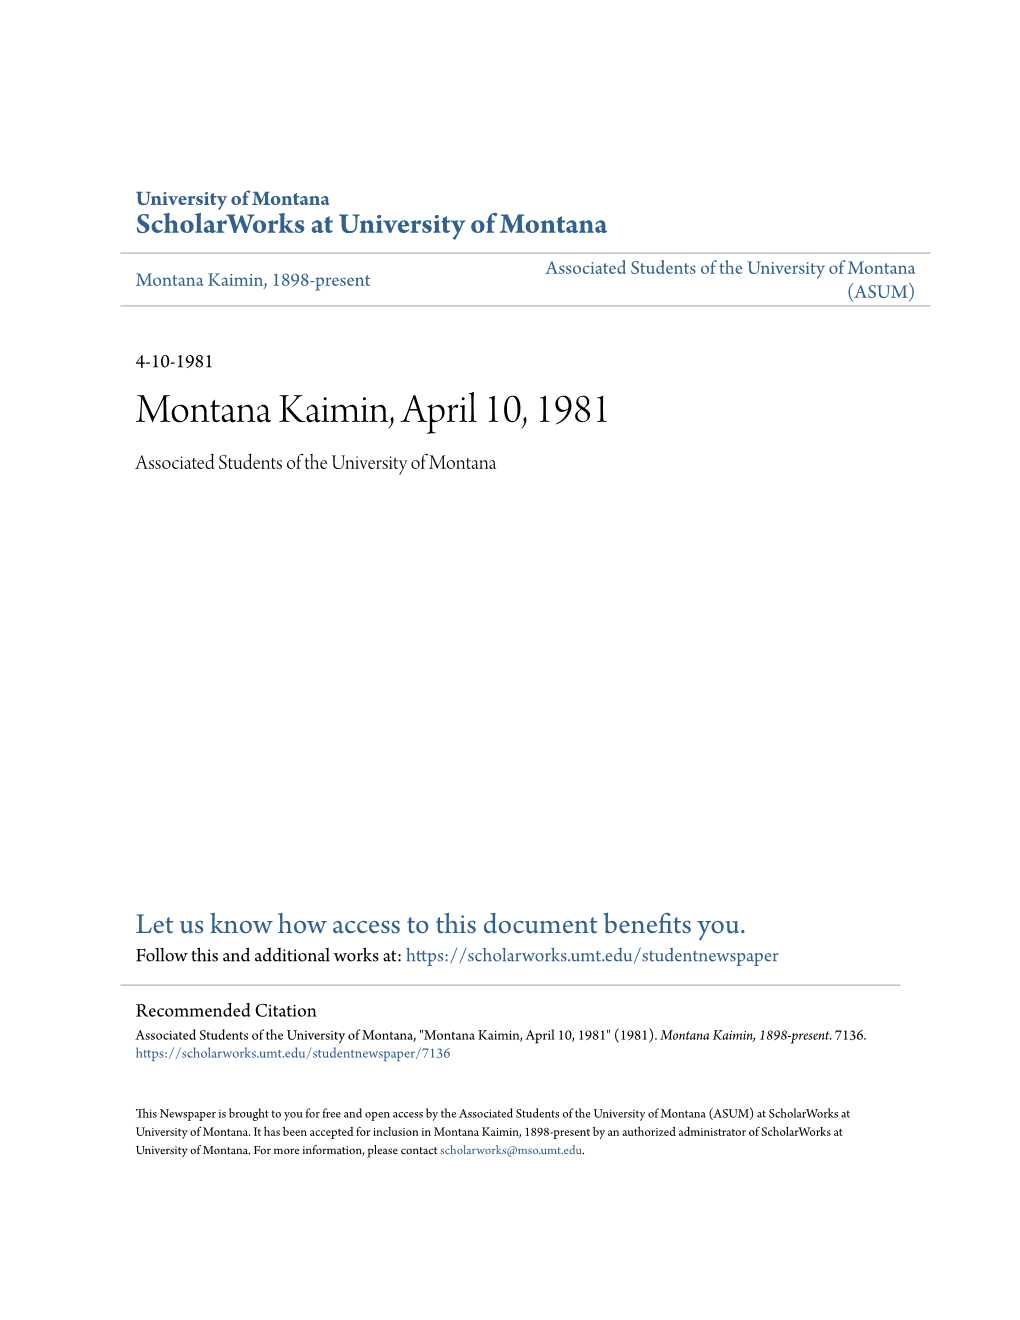 Montana Kaimin, April 10, 1981 Associated Students of the University of Montana